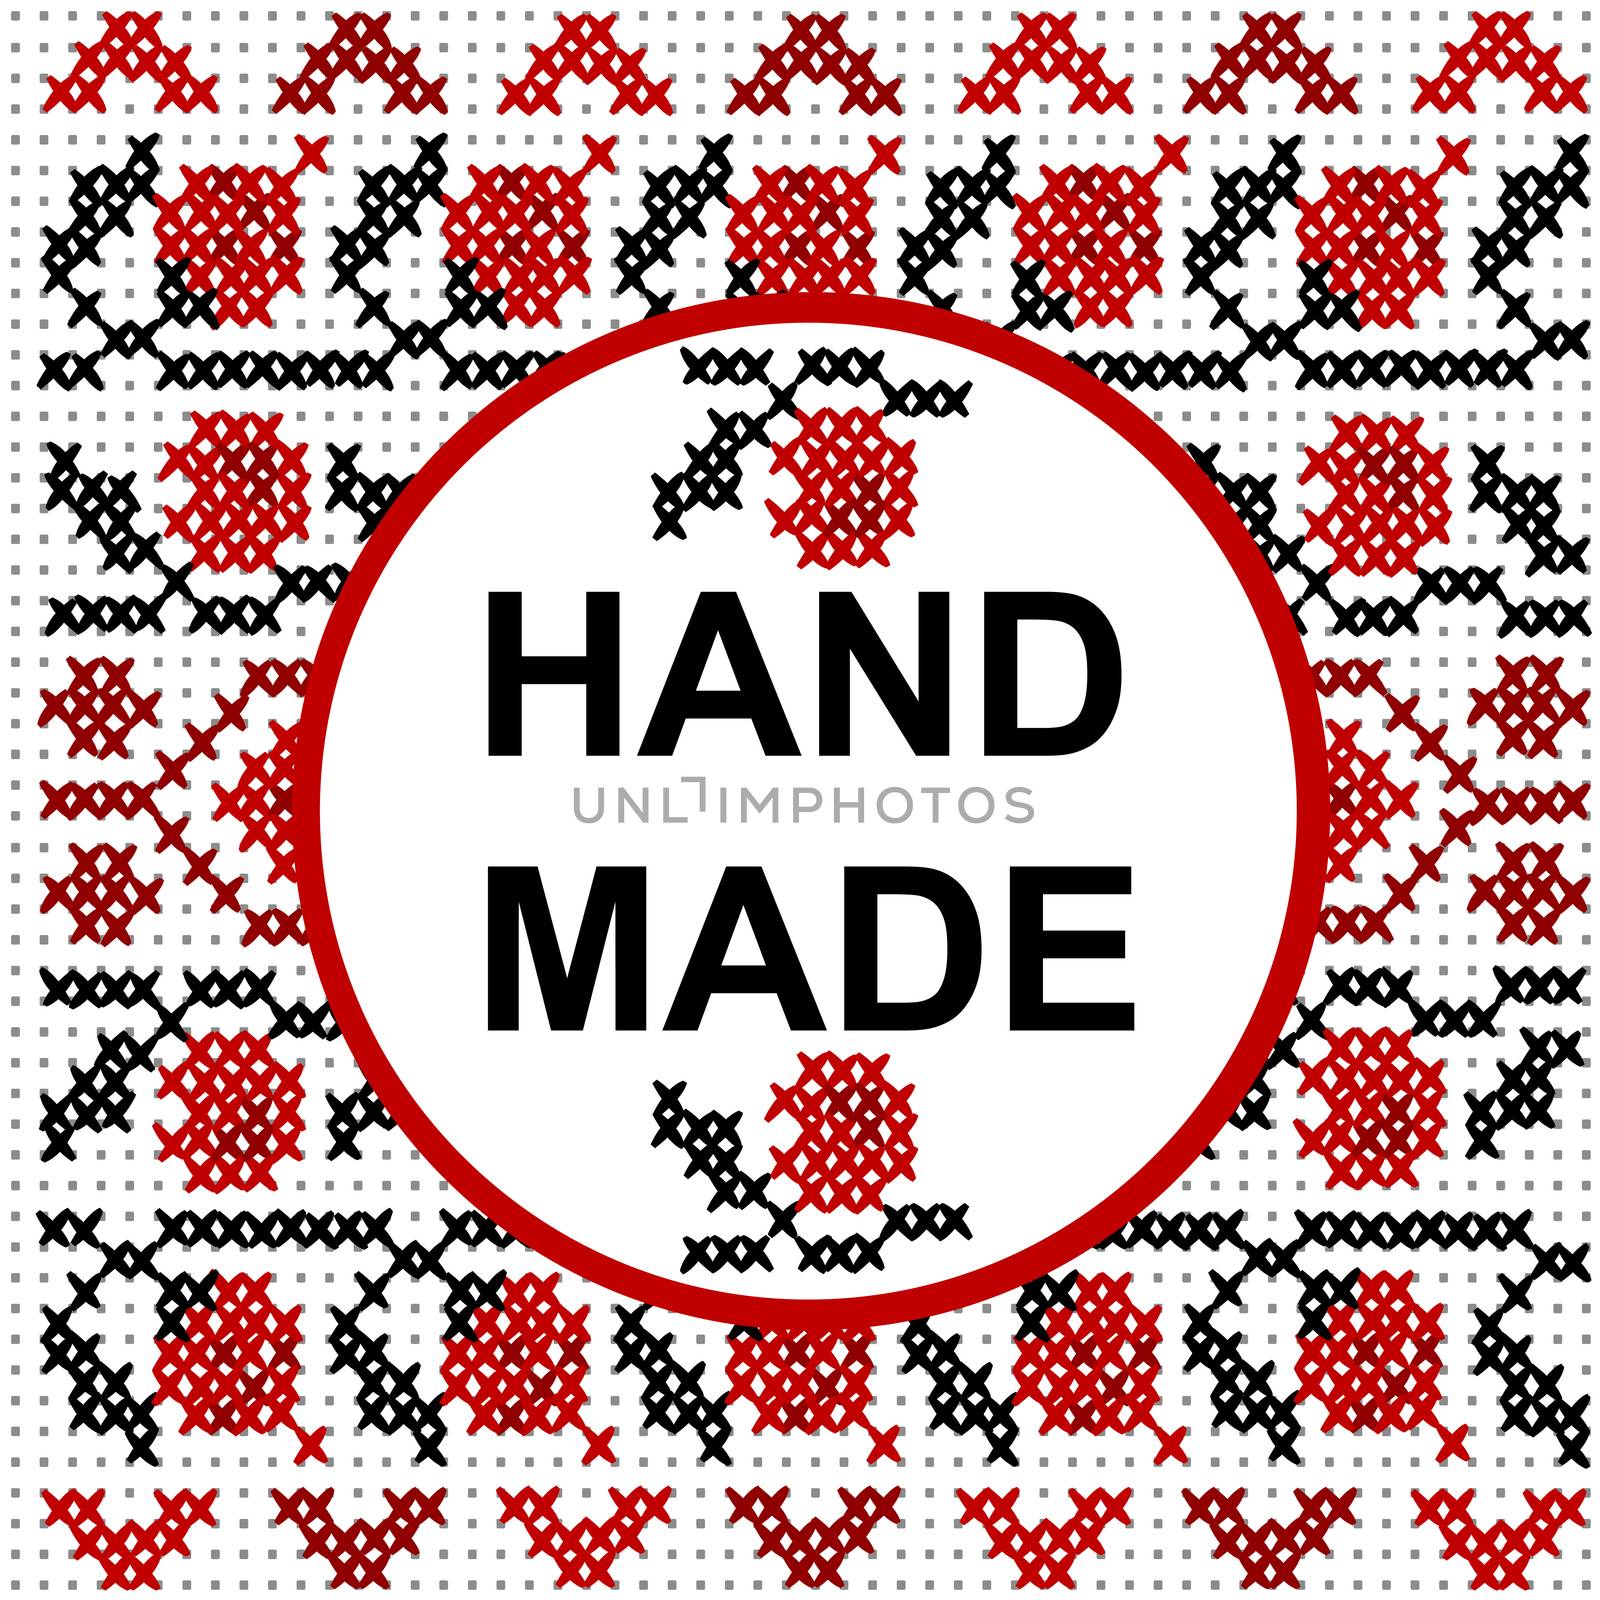 Handmade round frame over a cross stitch pattern by hibrida13